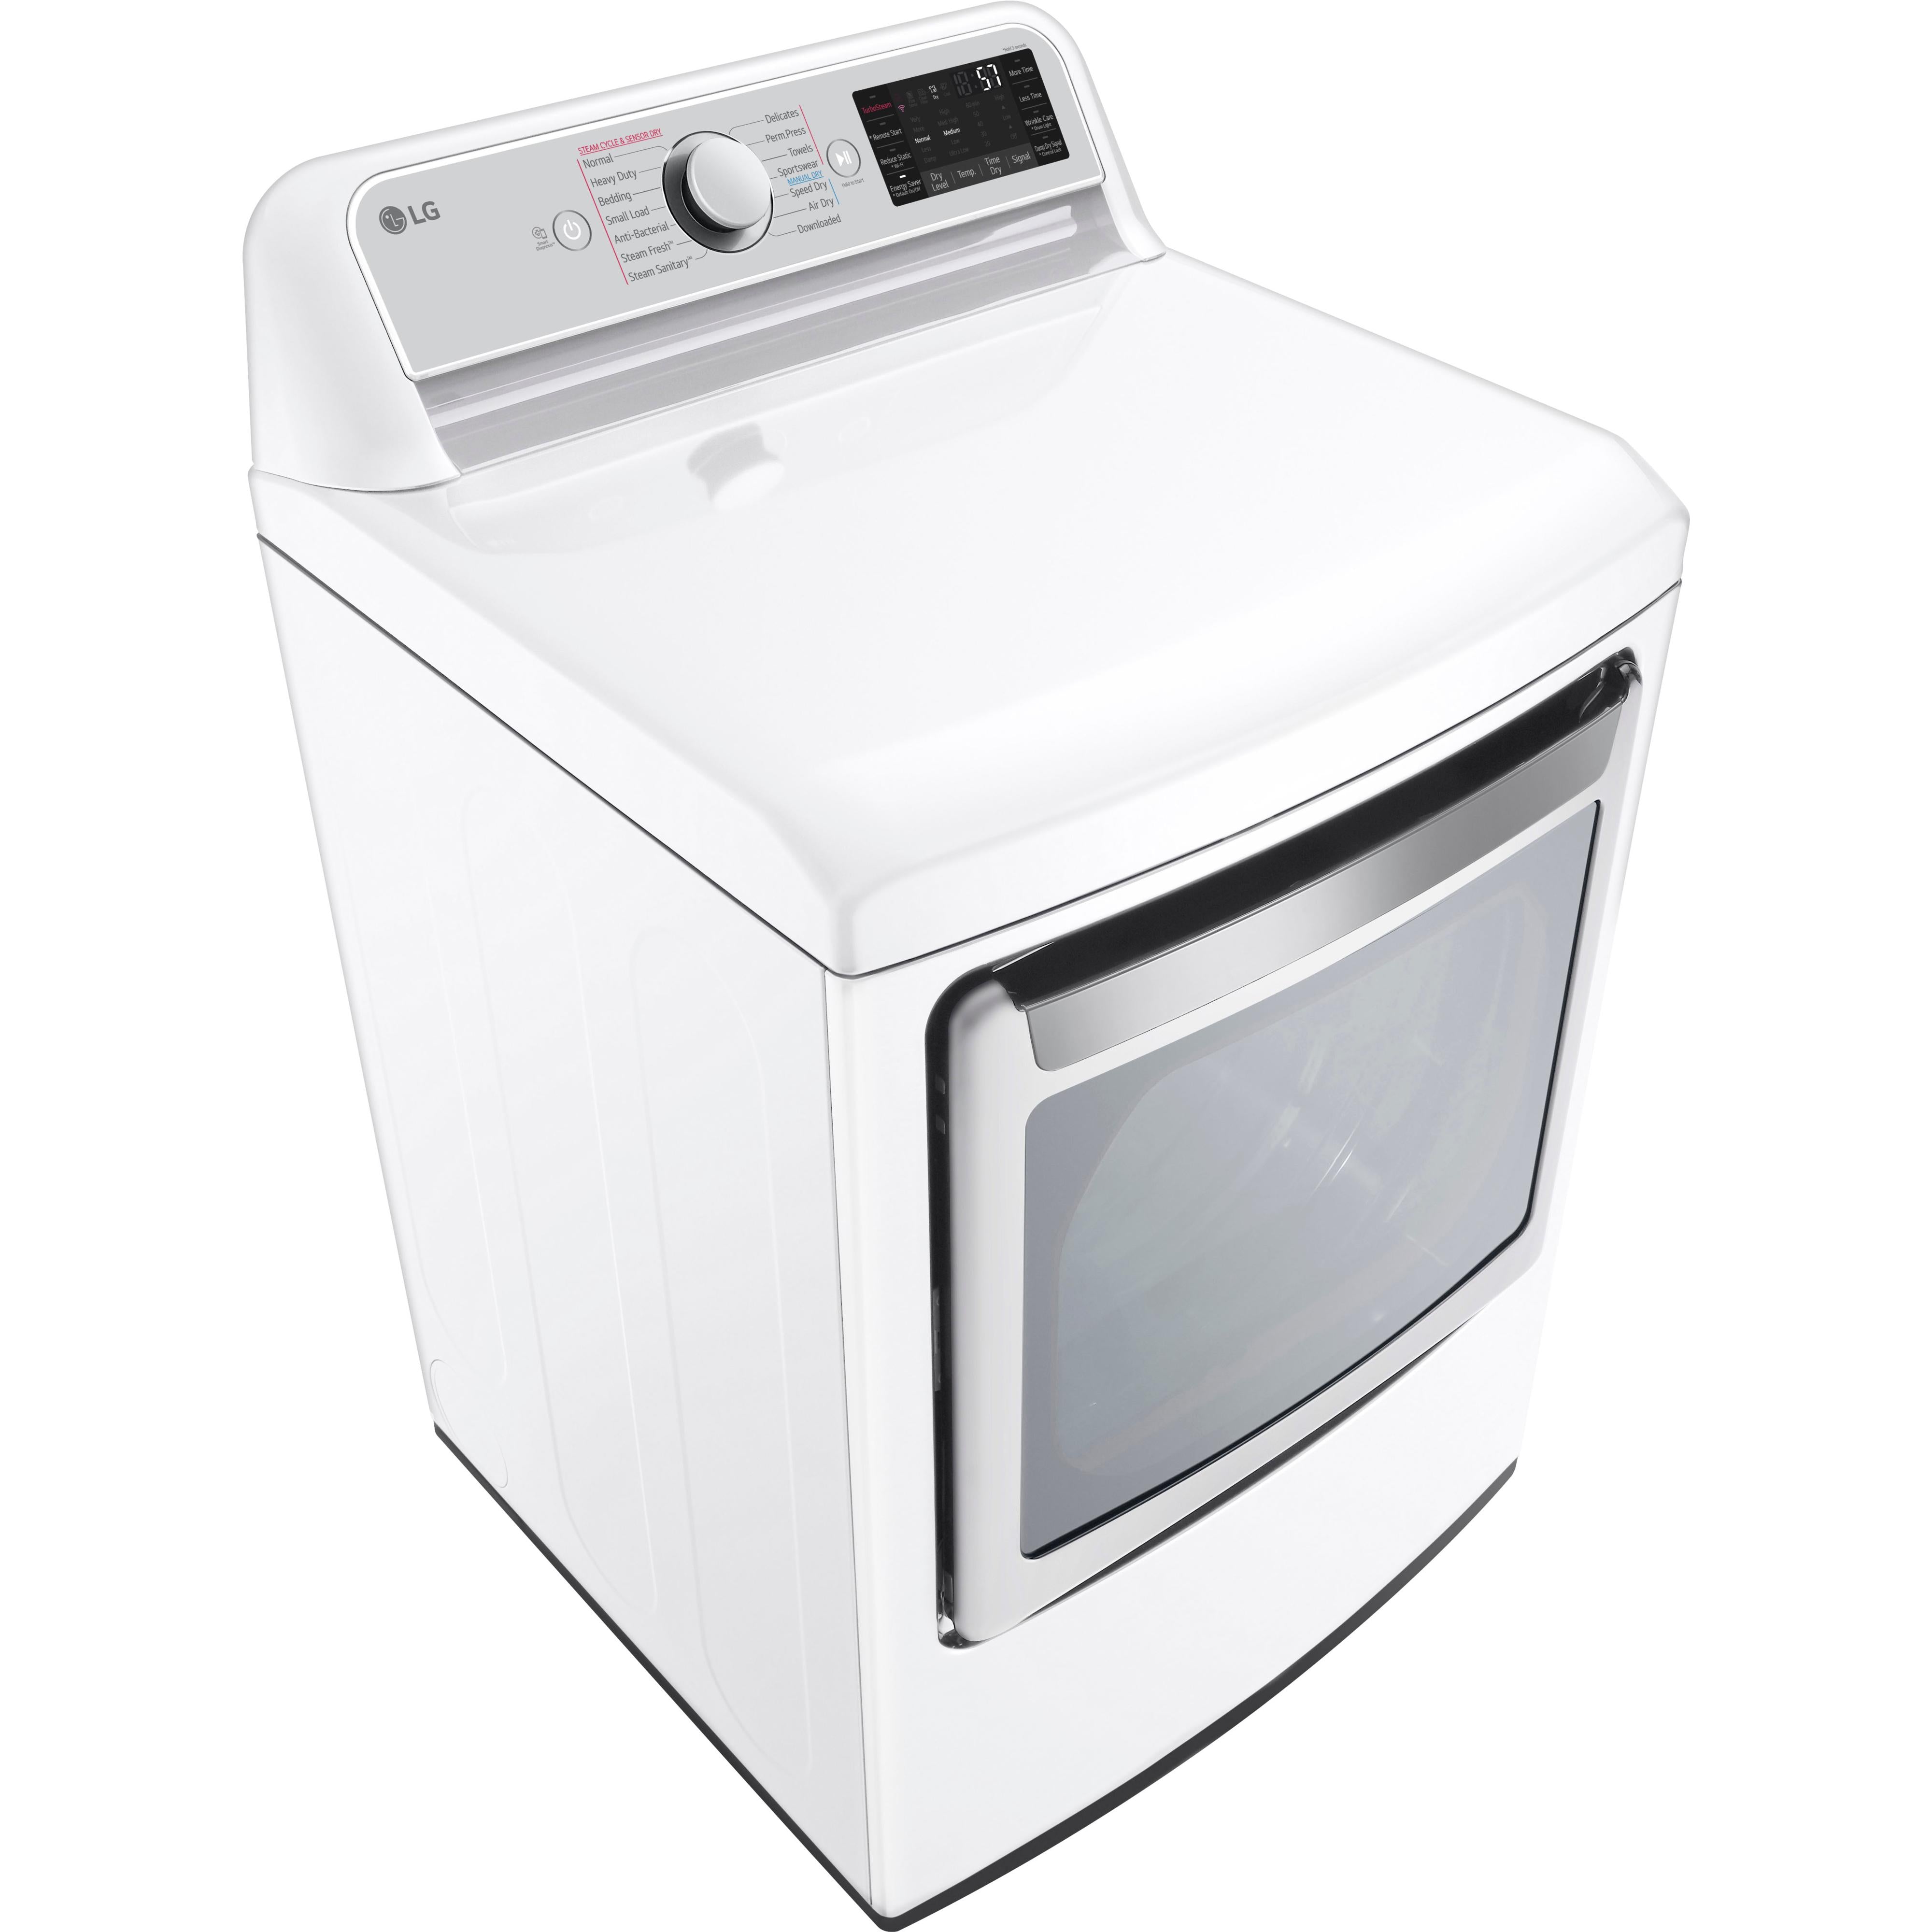 LG 7.3 cu. ft. Gas Dryer with TurboSteam? DLGX7901WE